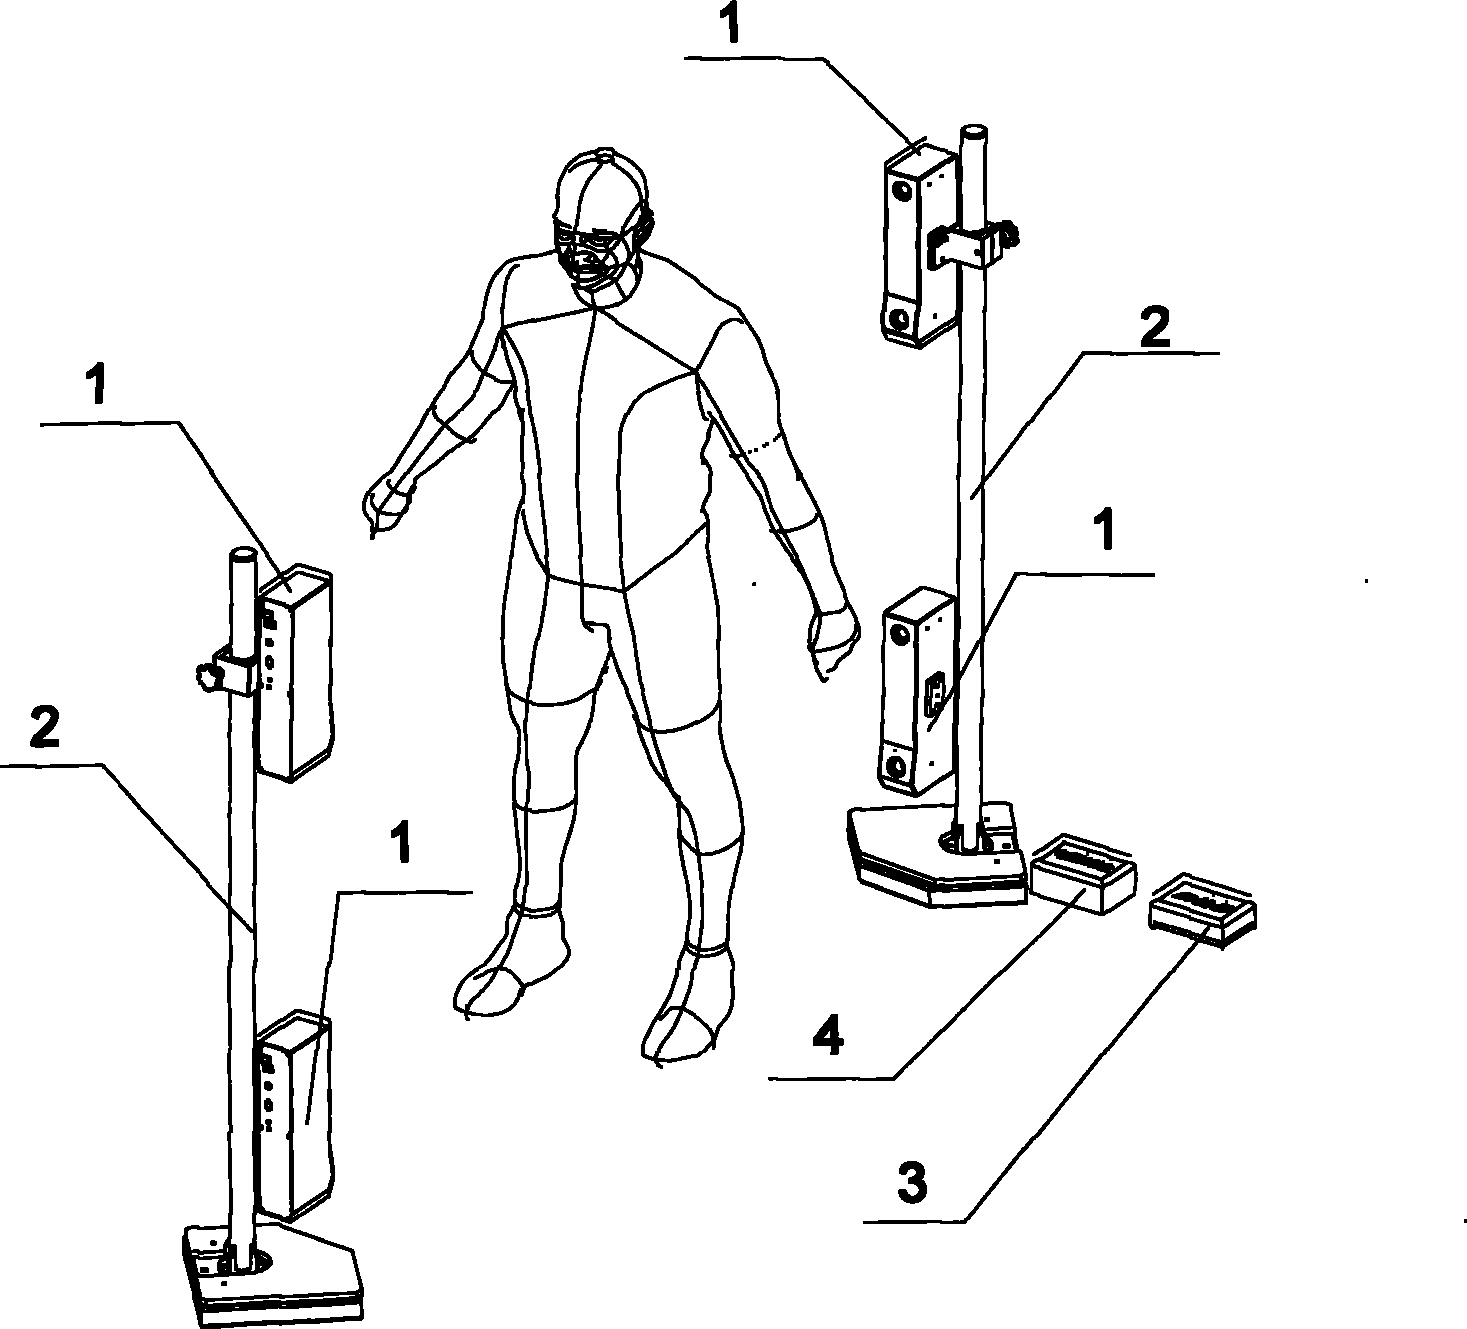 Multi-scanner fast human body three-dimensional scanning system